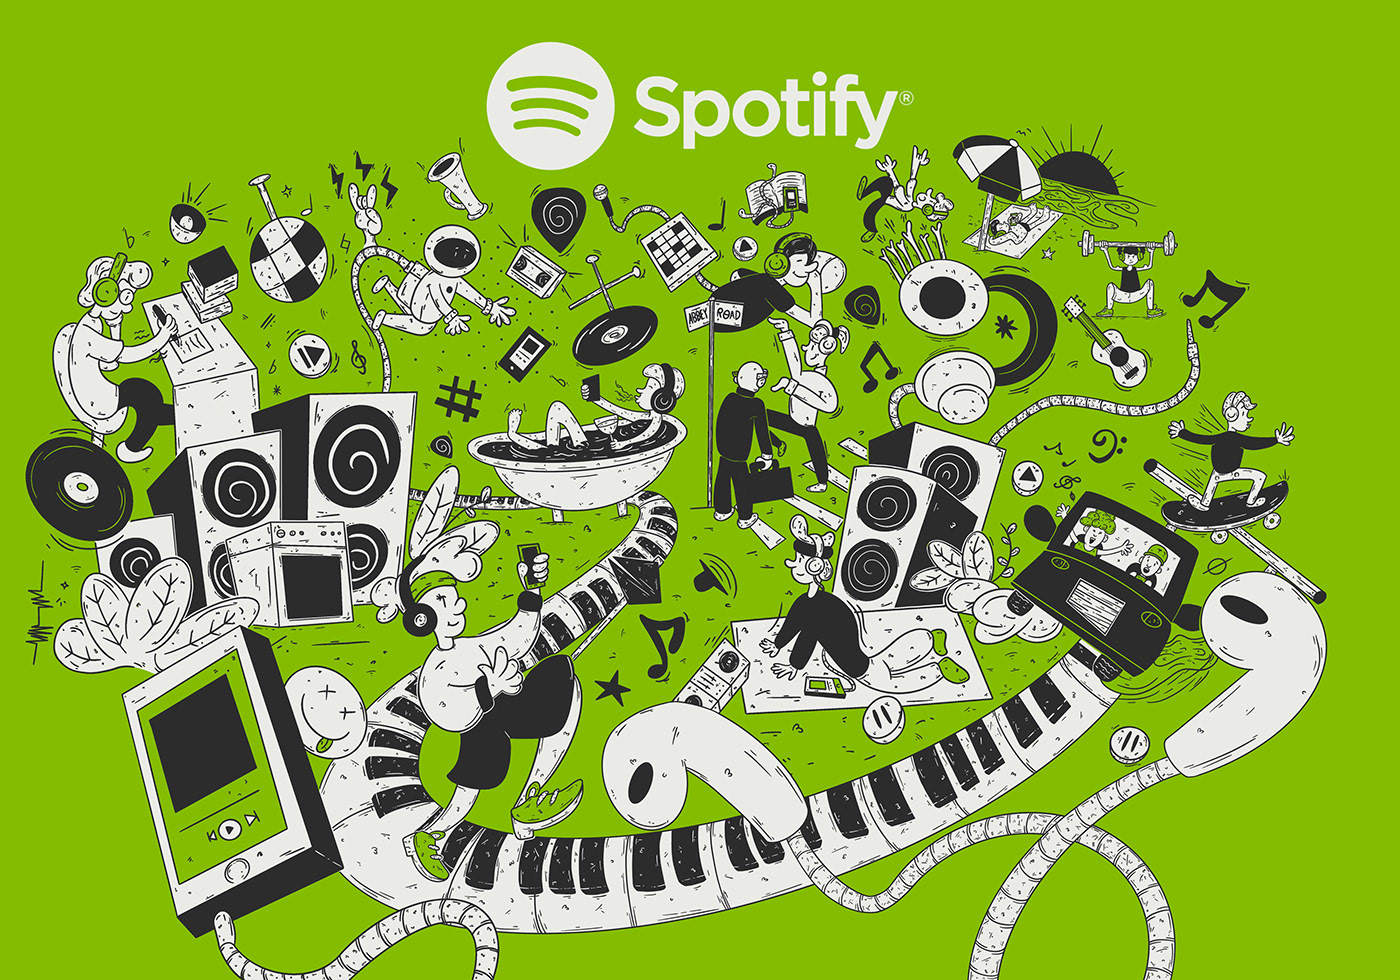 music spotify cover doodle cartoon digital illustration embalagem Packaging publicidade